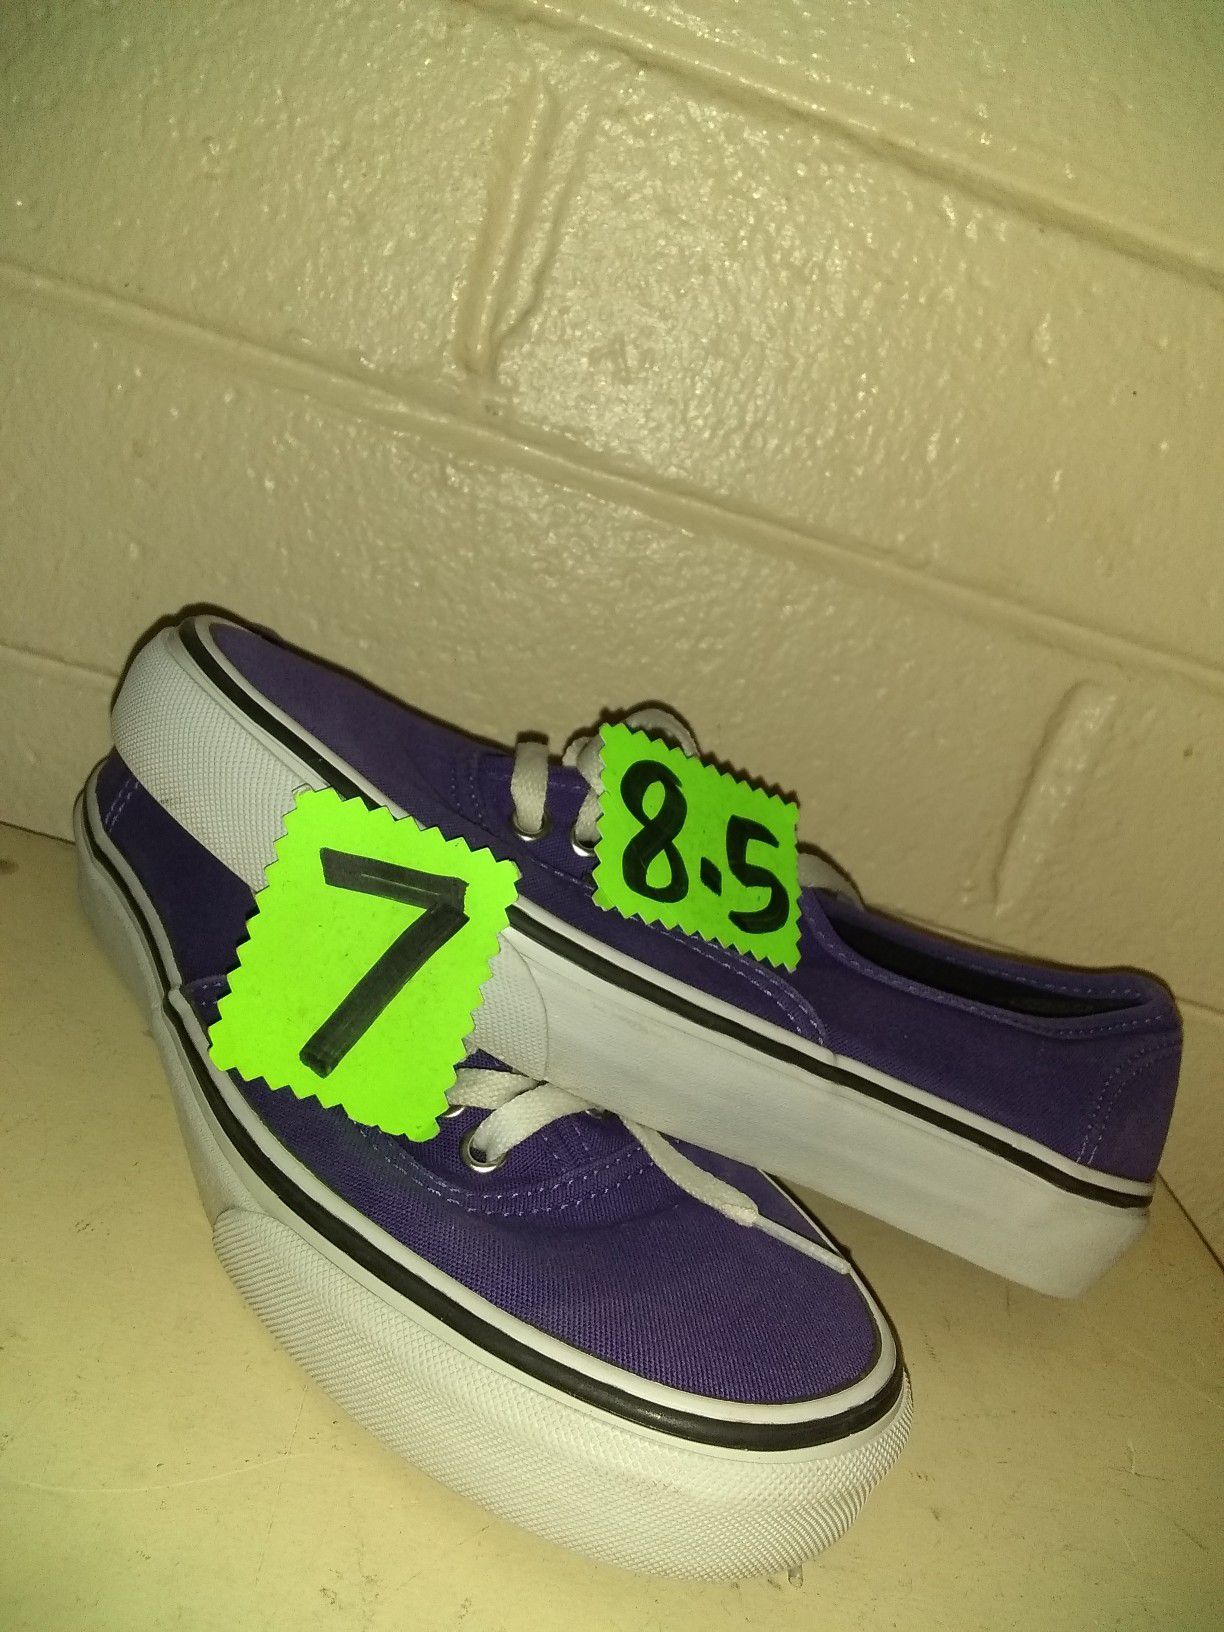 Size 7m8w Vans skateboard shoes